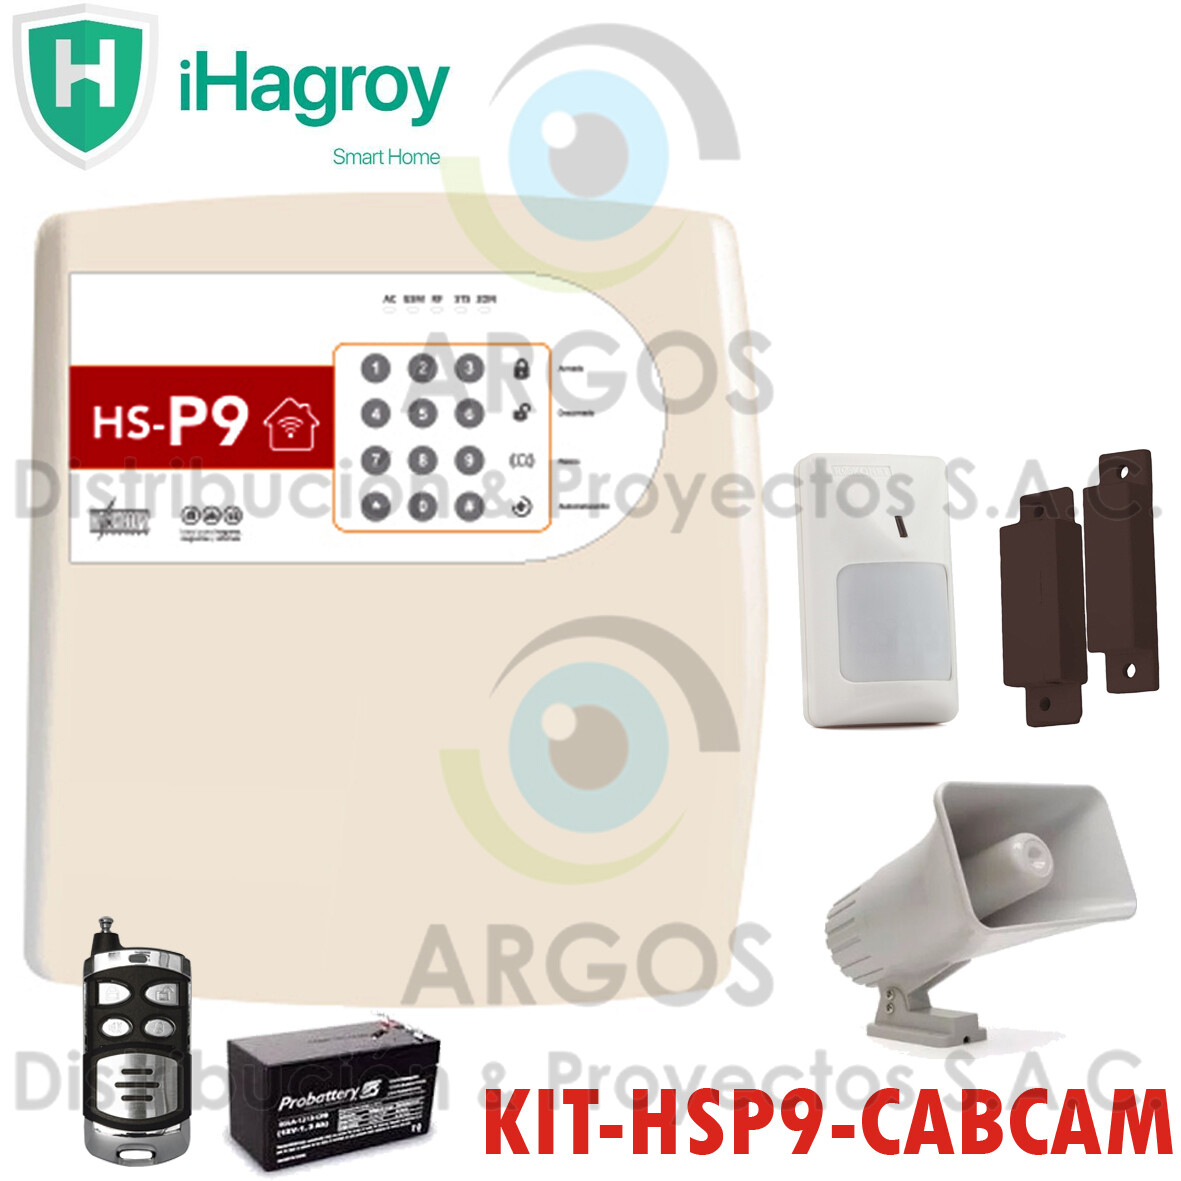 KIT ALARMA ANTI ROBO GSM SMART P9 HAGROY